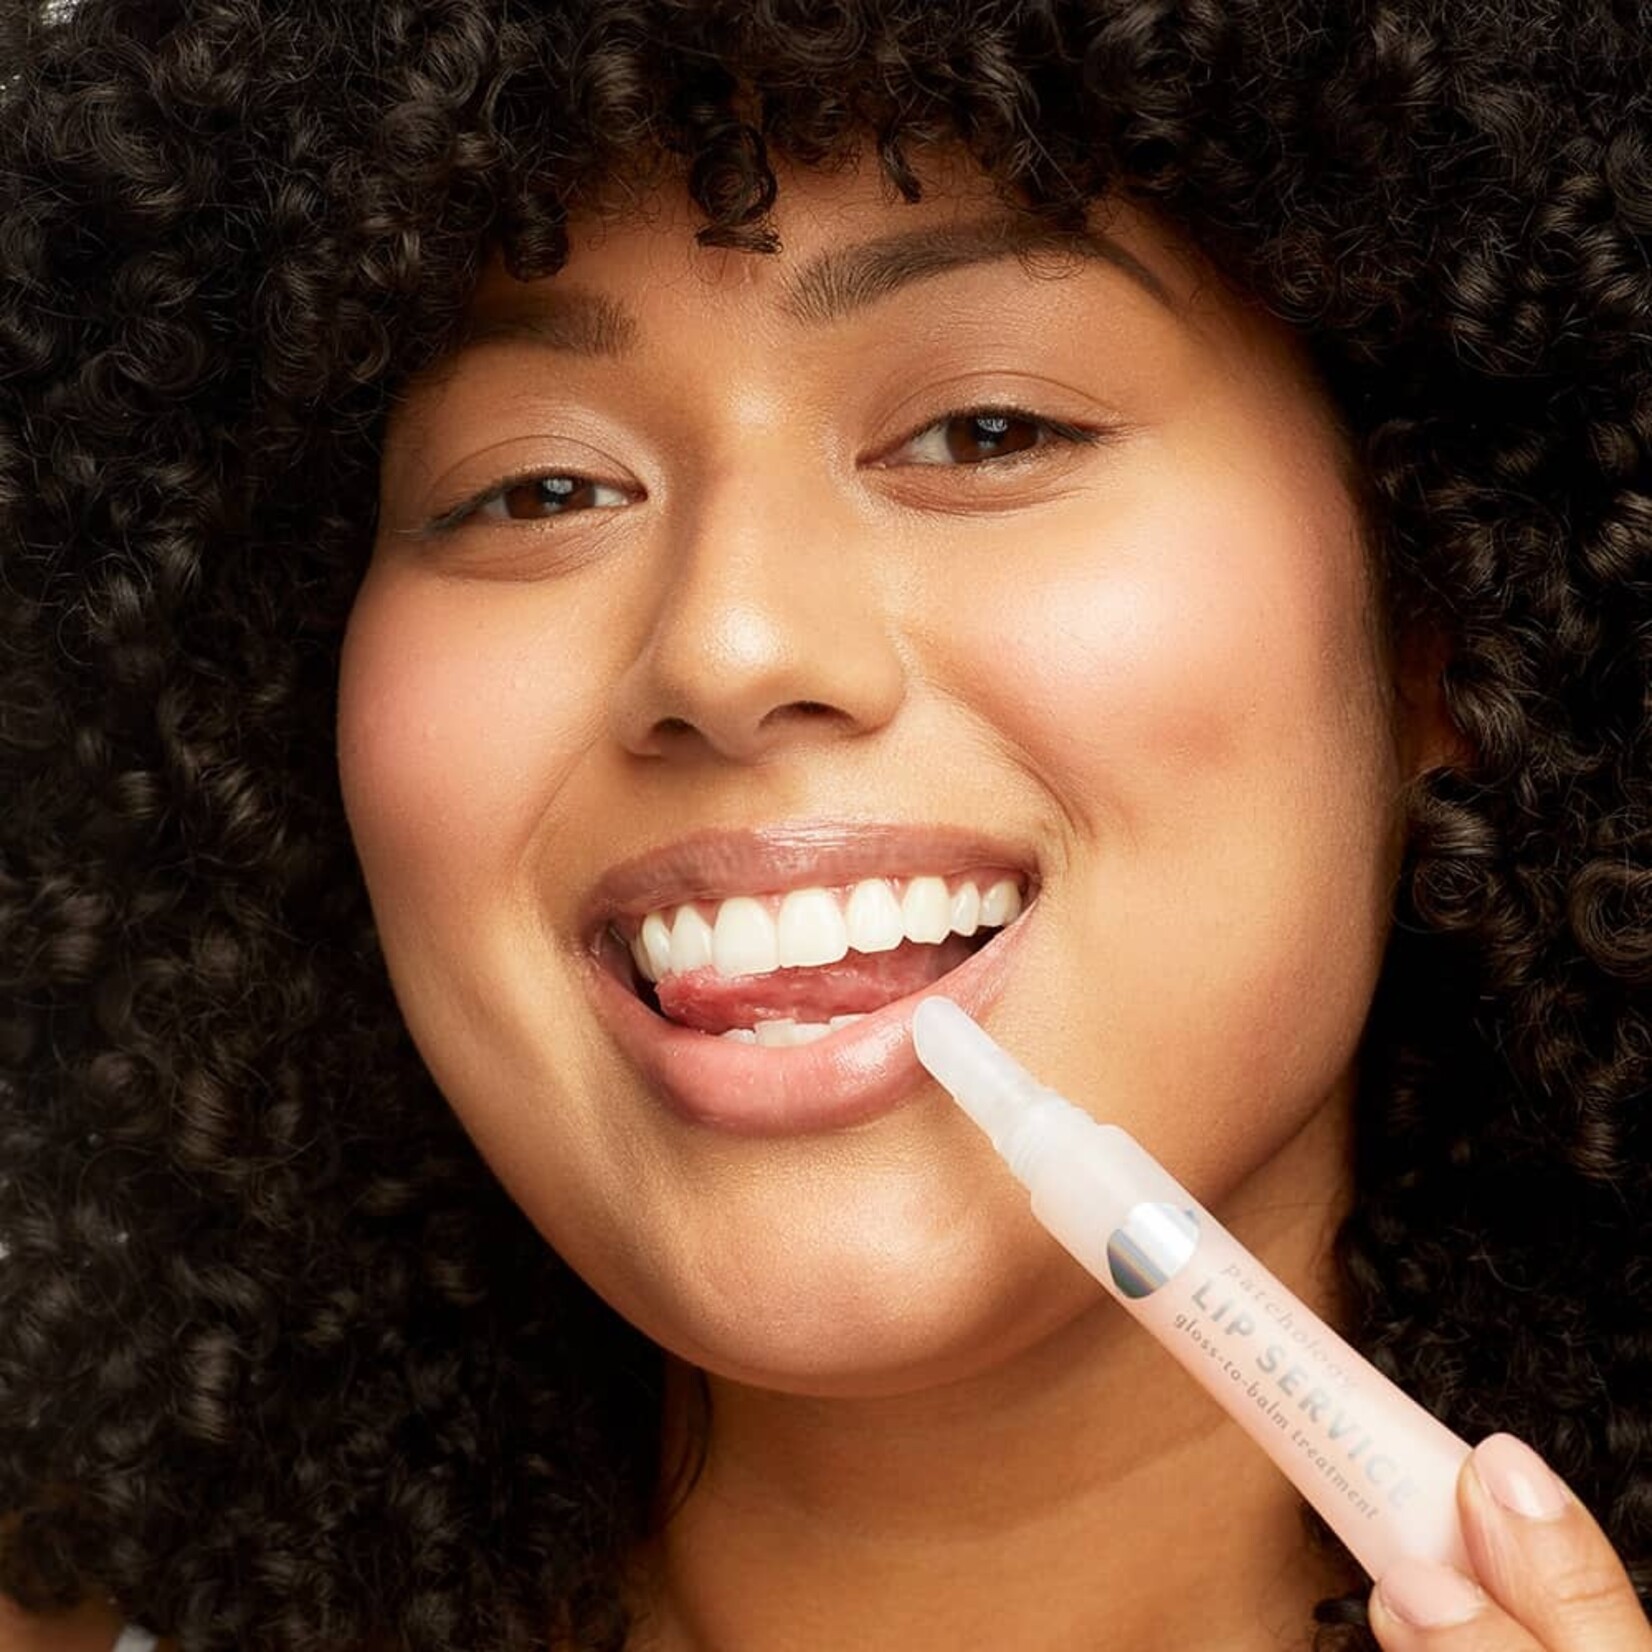 Lip Service Gloss-to-Balm Treatment, Patchology